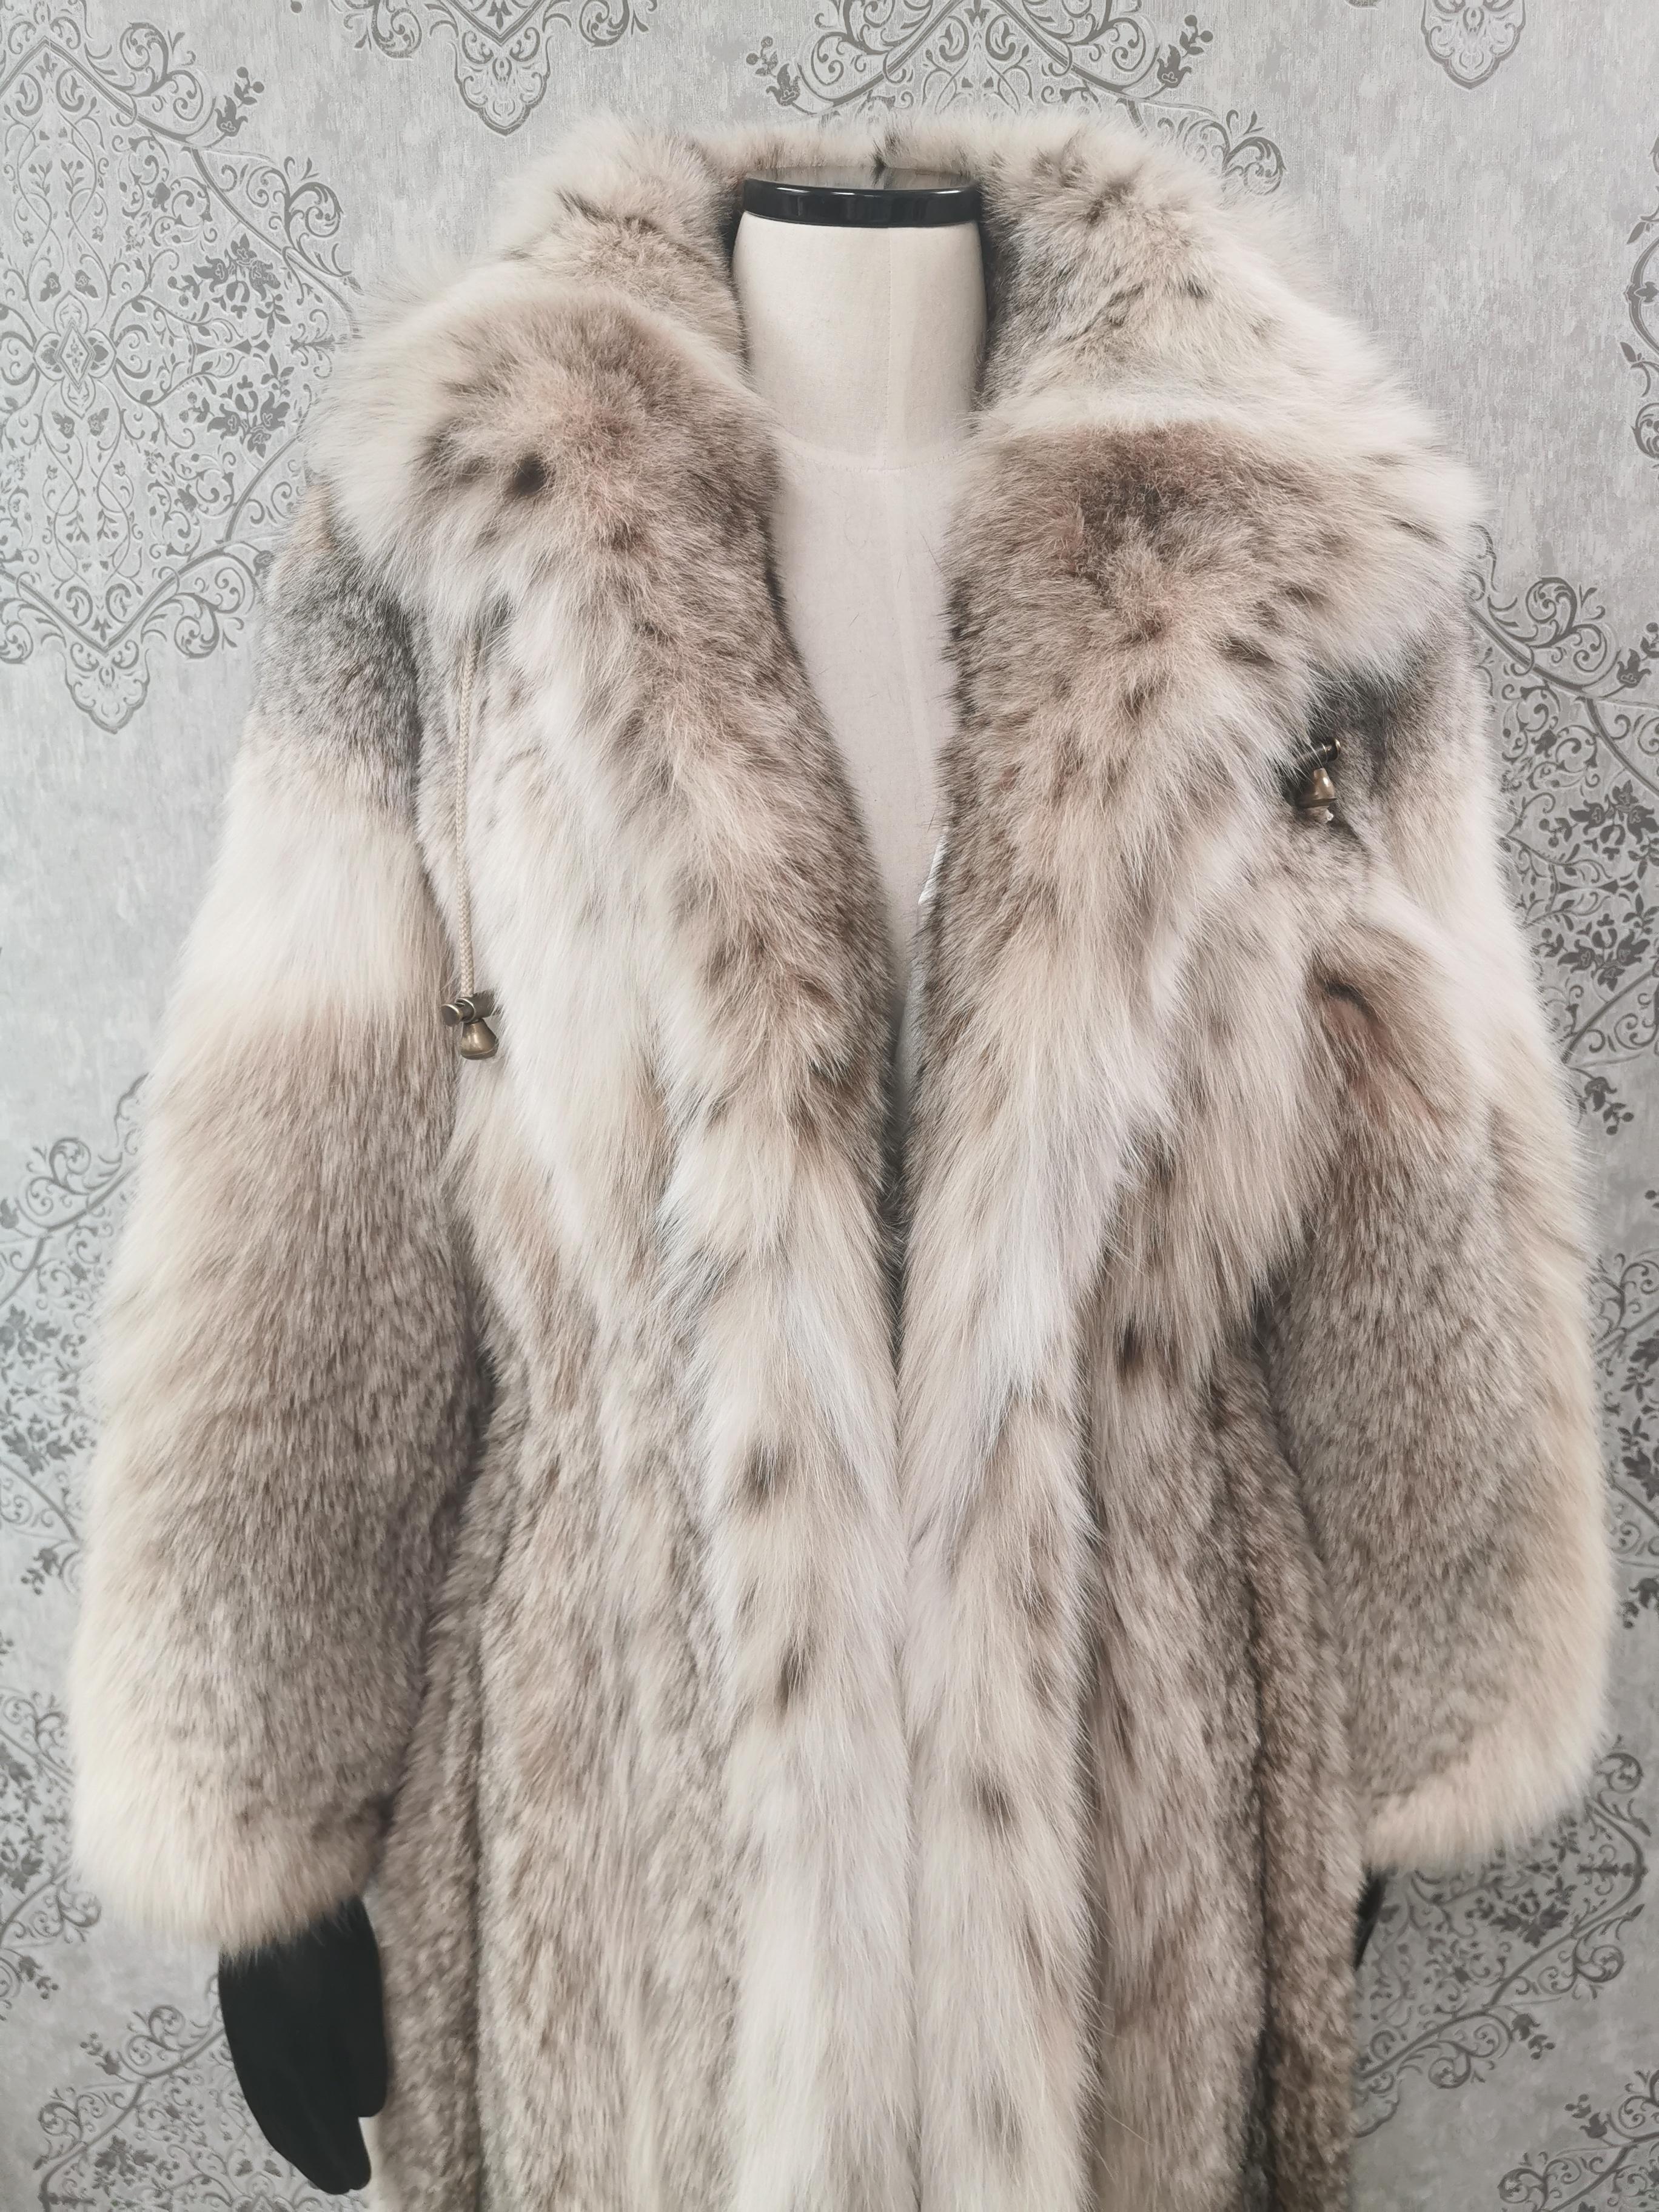 DESCRIPTION : Brand new Canadian lynx fur coat with detachable hood size 14 L

Tailored collar, straight sleeves, integraded belt, detachable hood, supple skins, beautiful fresh fur, european german clasps for closure, too slit pockets, nice big